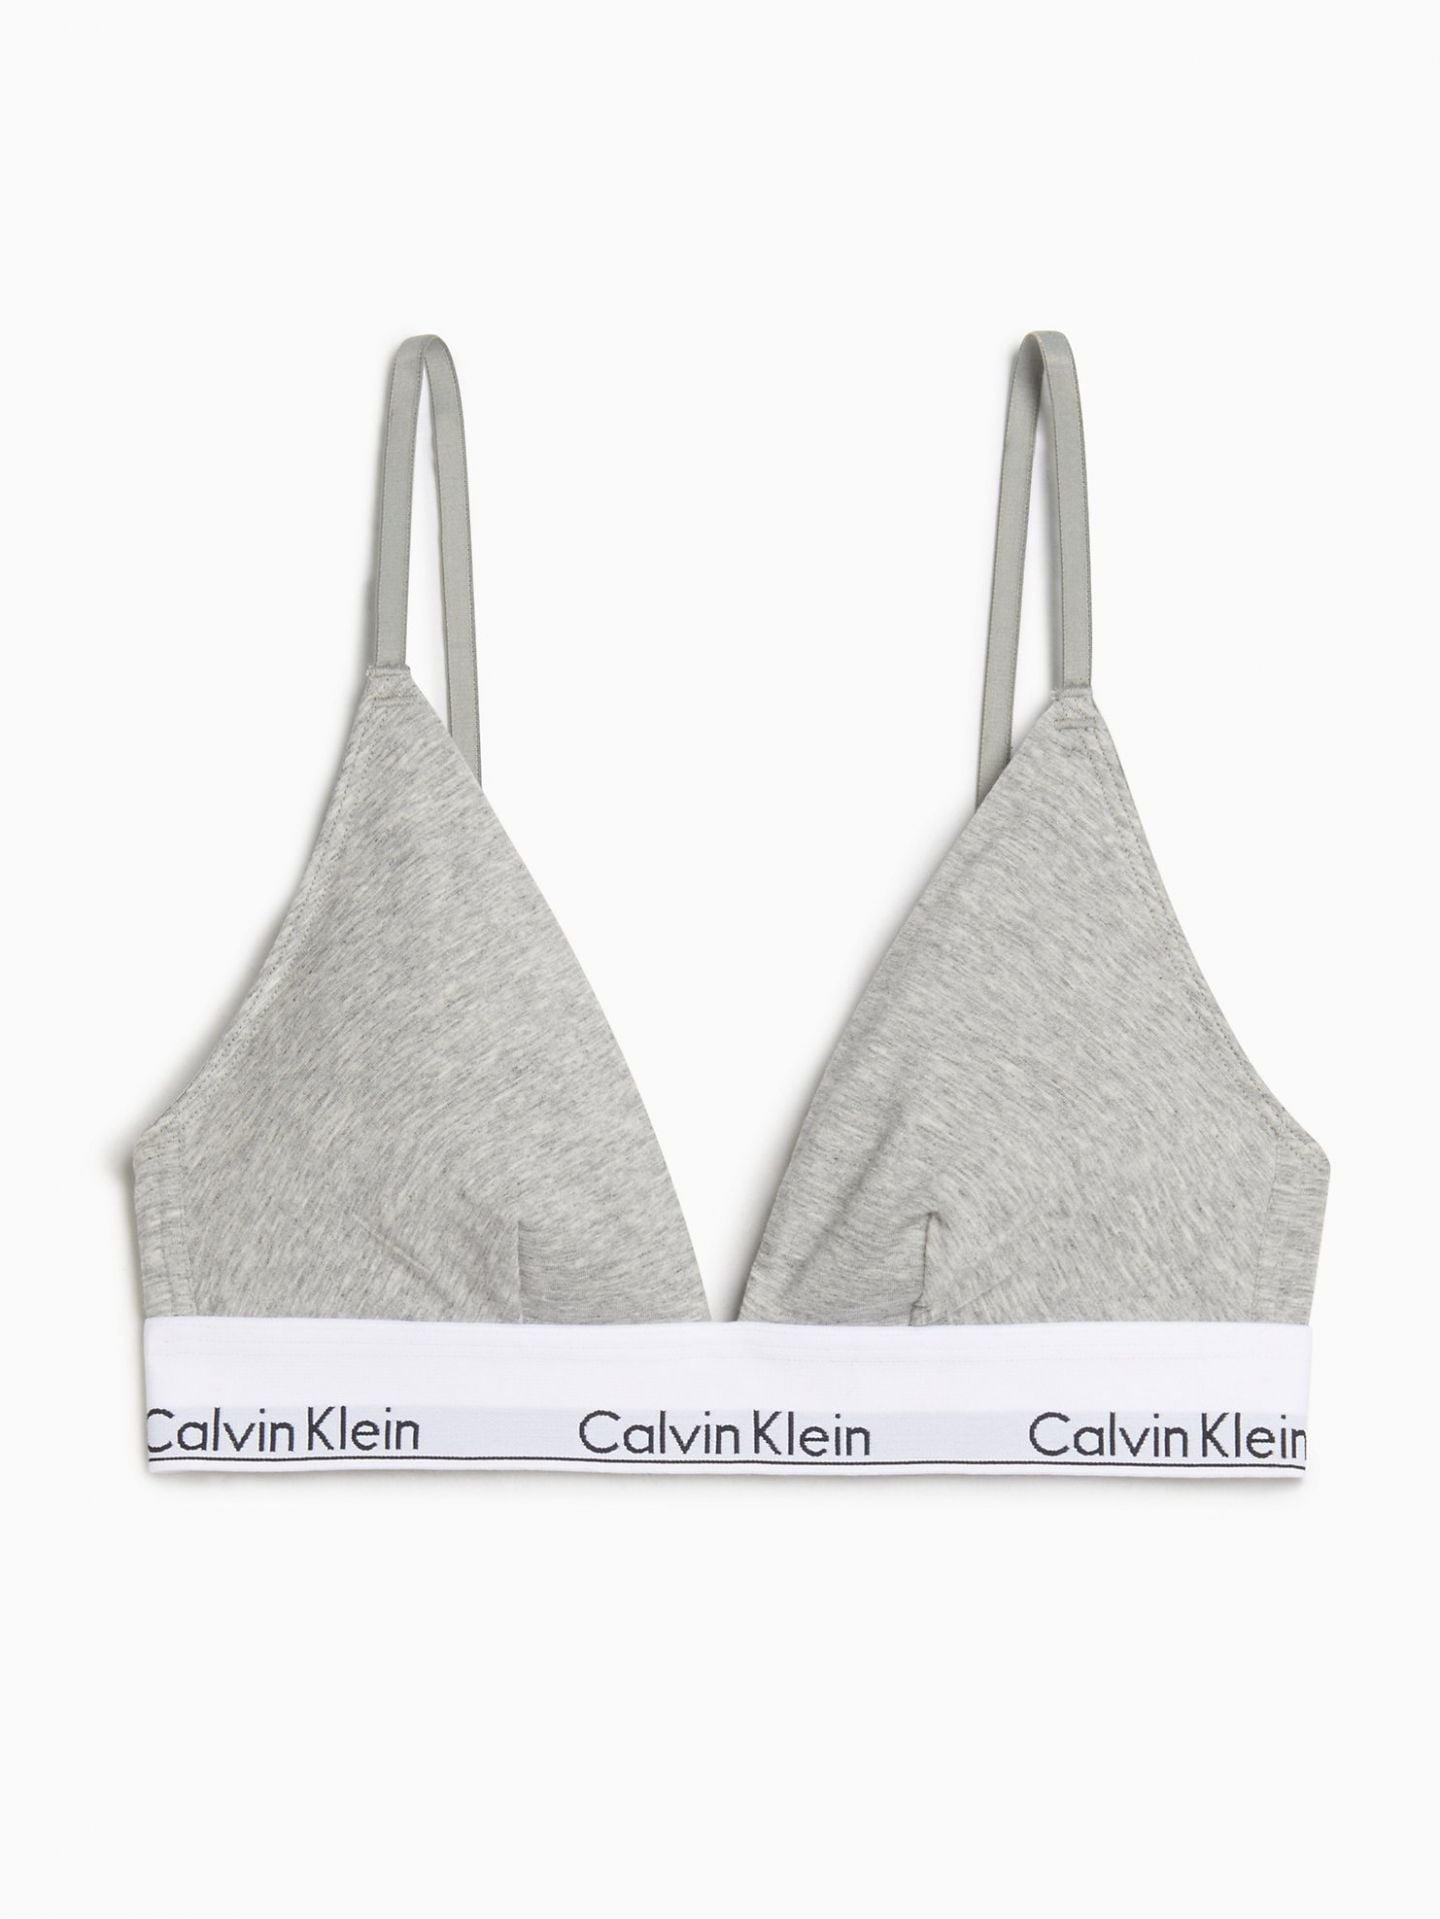 Calvin Klein Unlined Triangle Bra